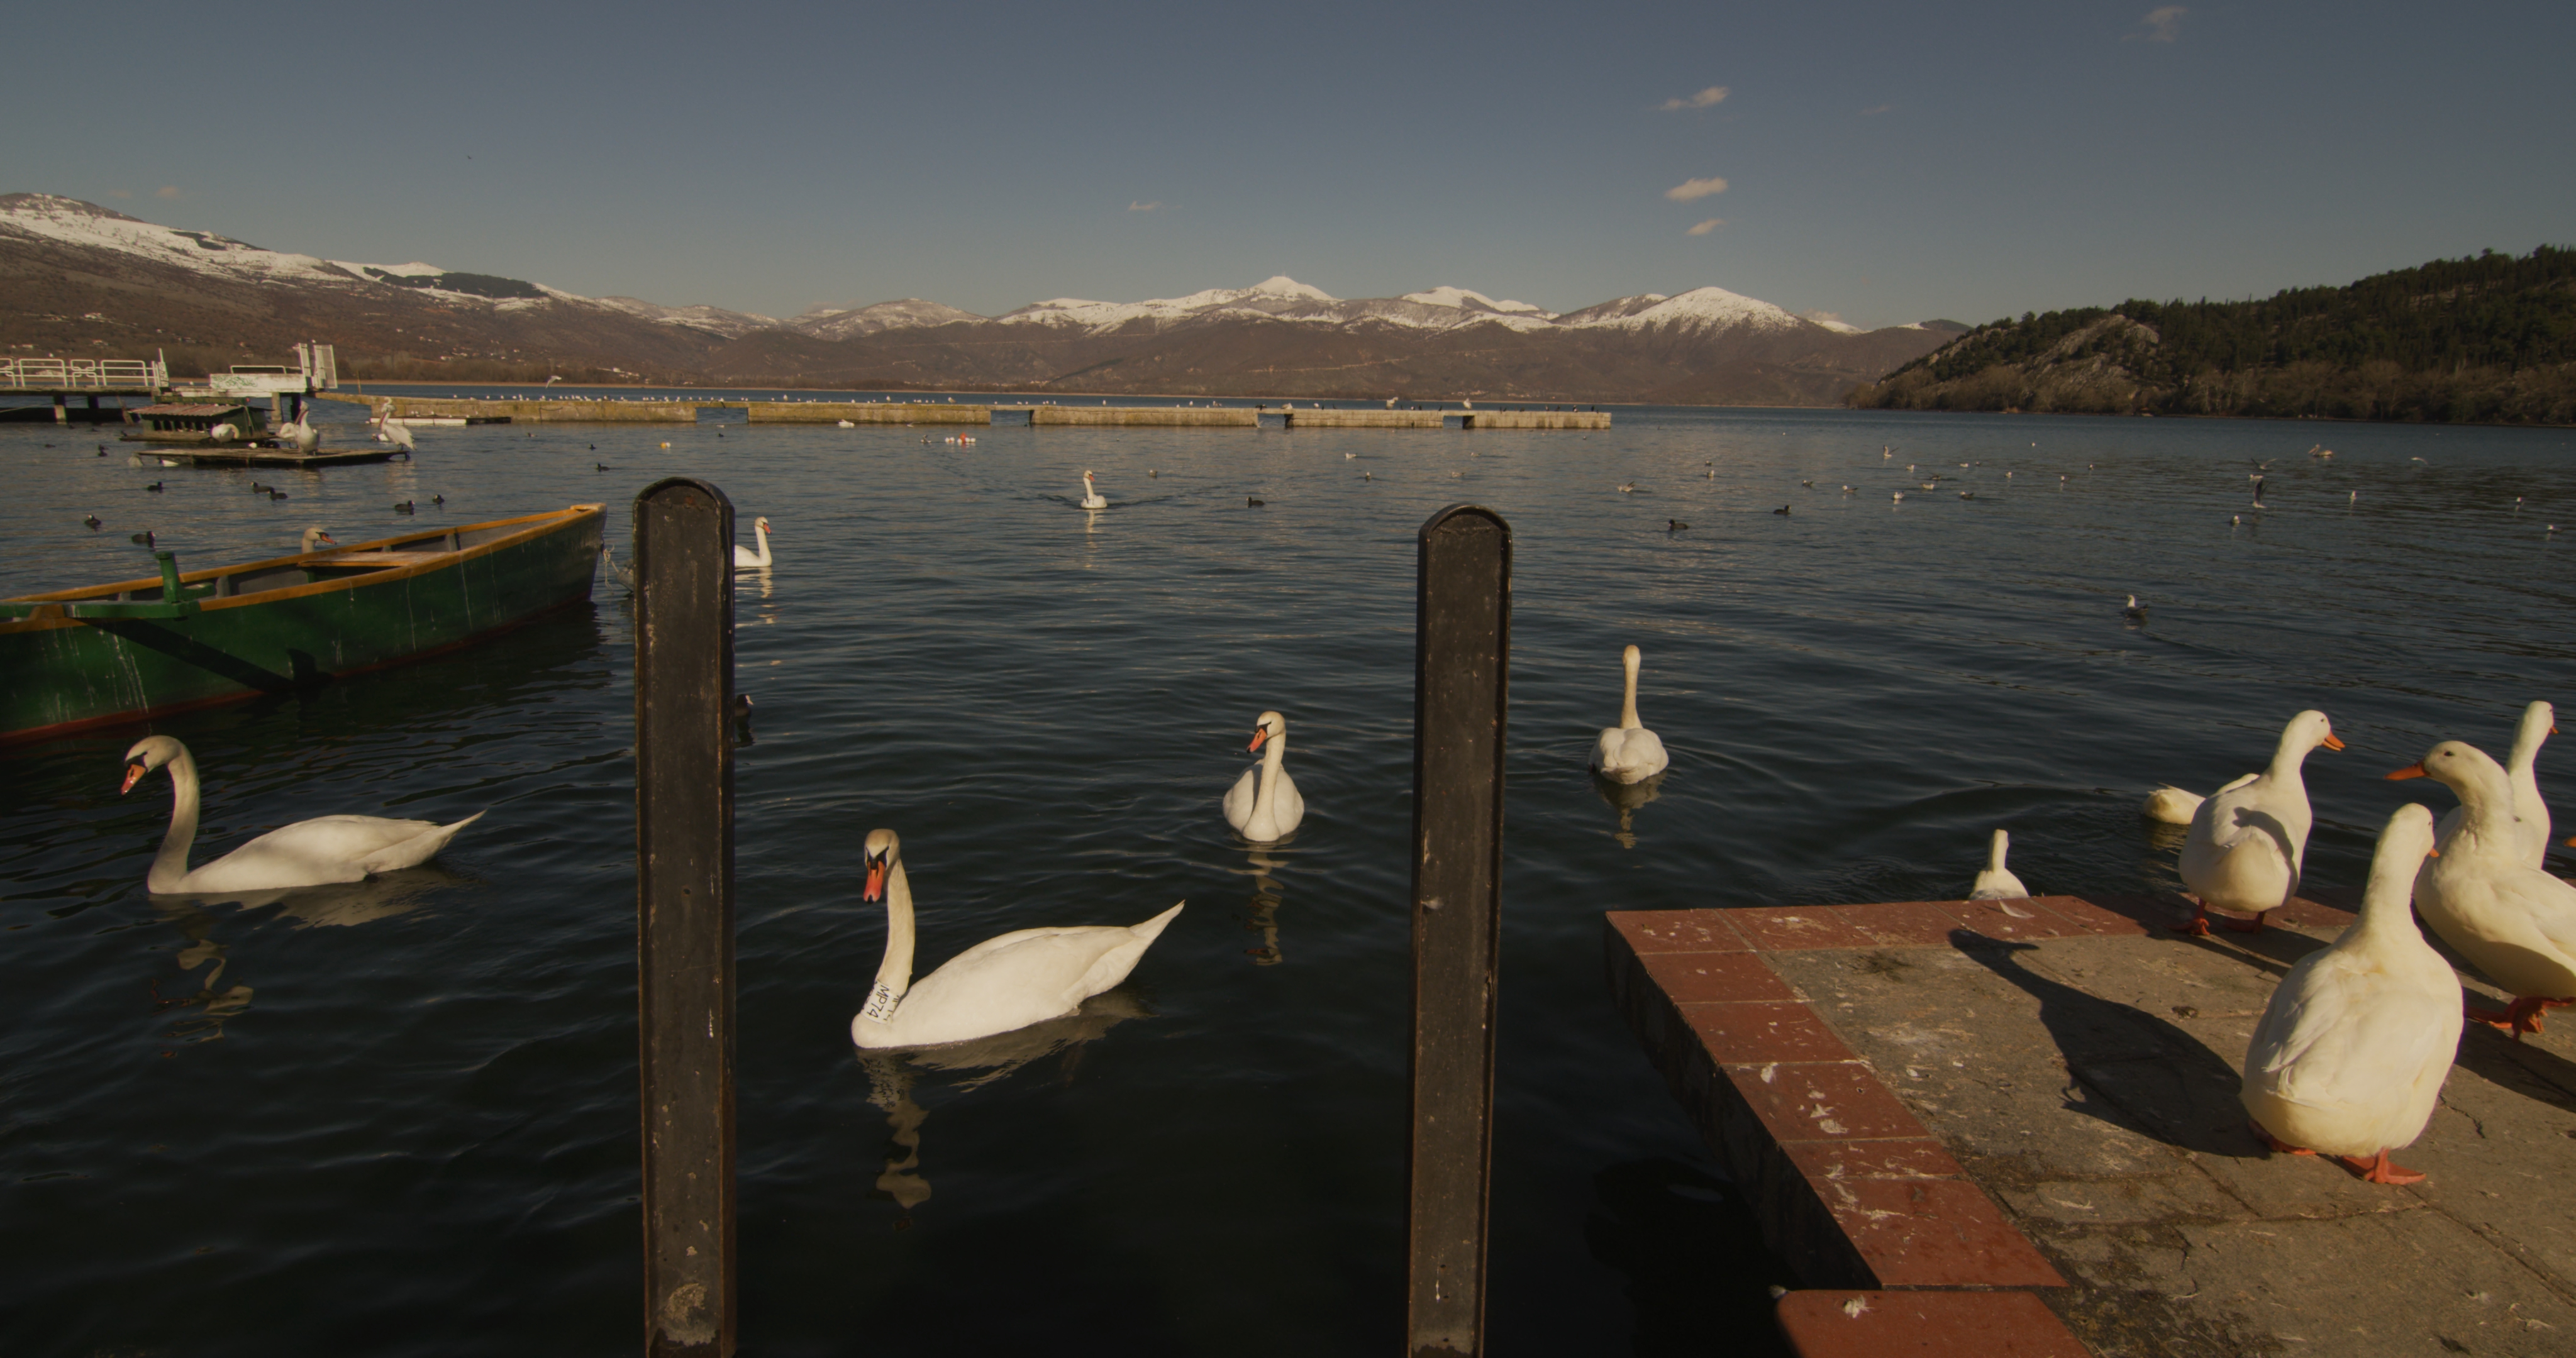 Kastoria lake, winter. North Greece.